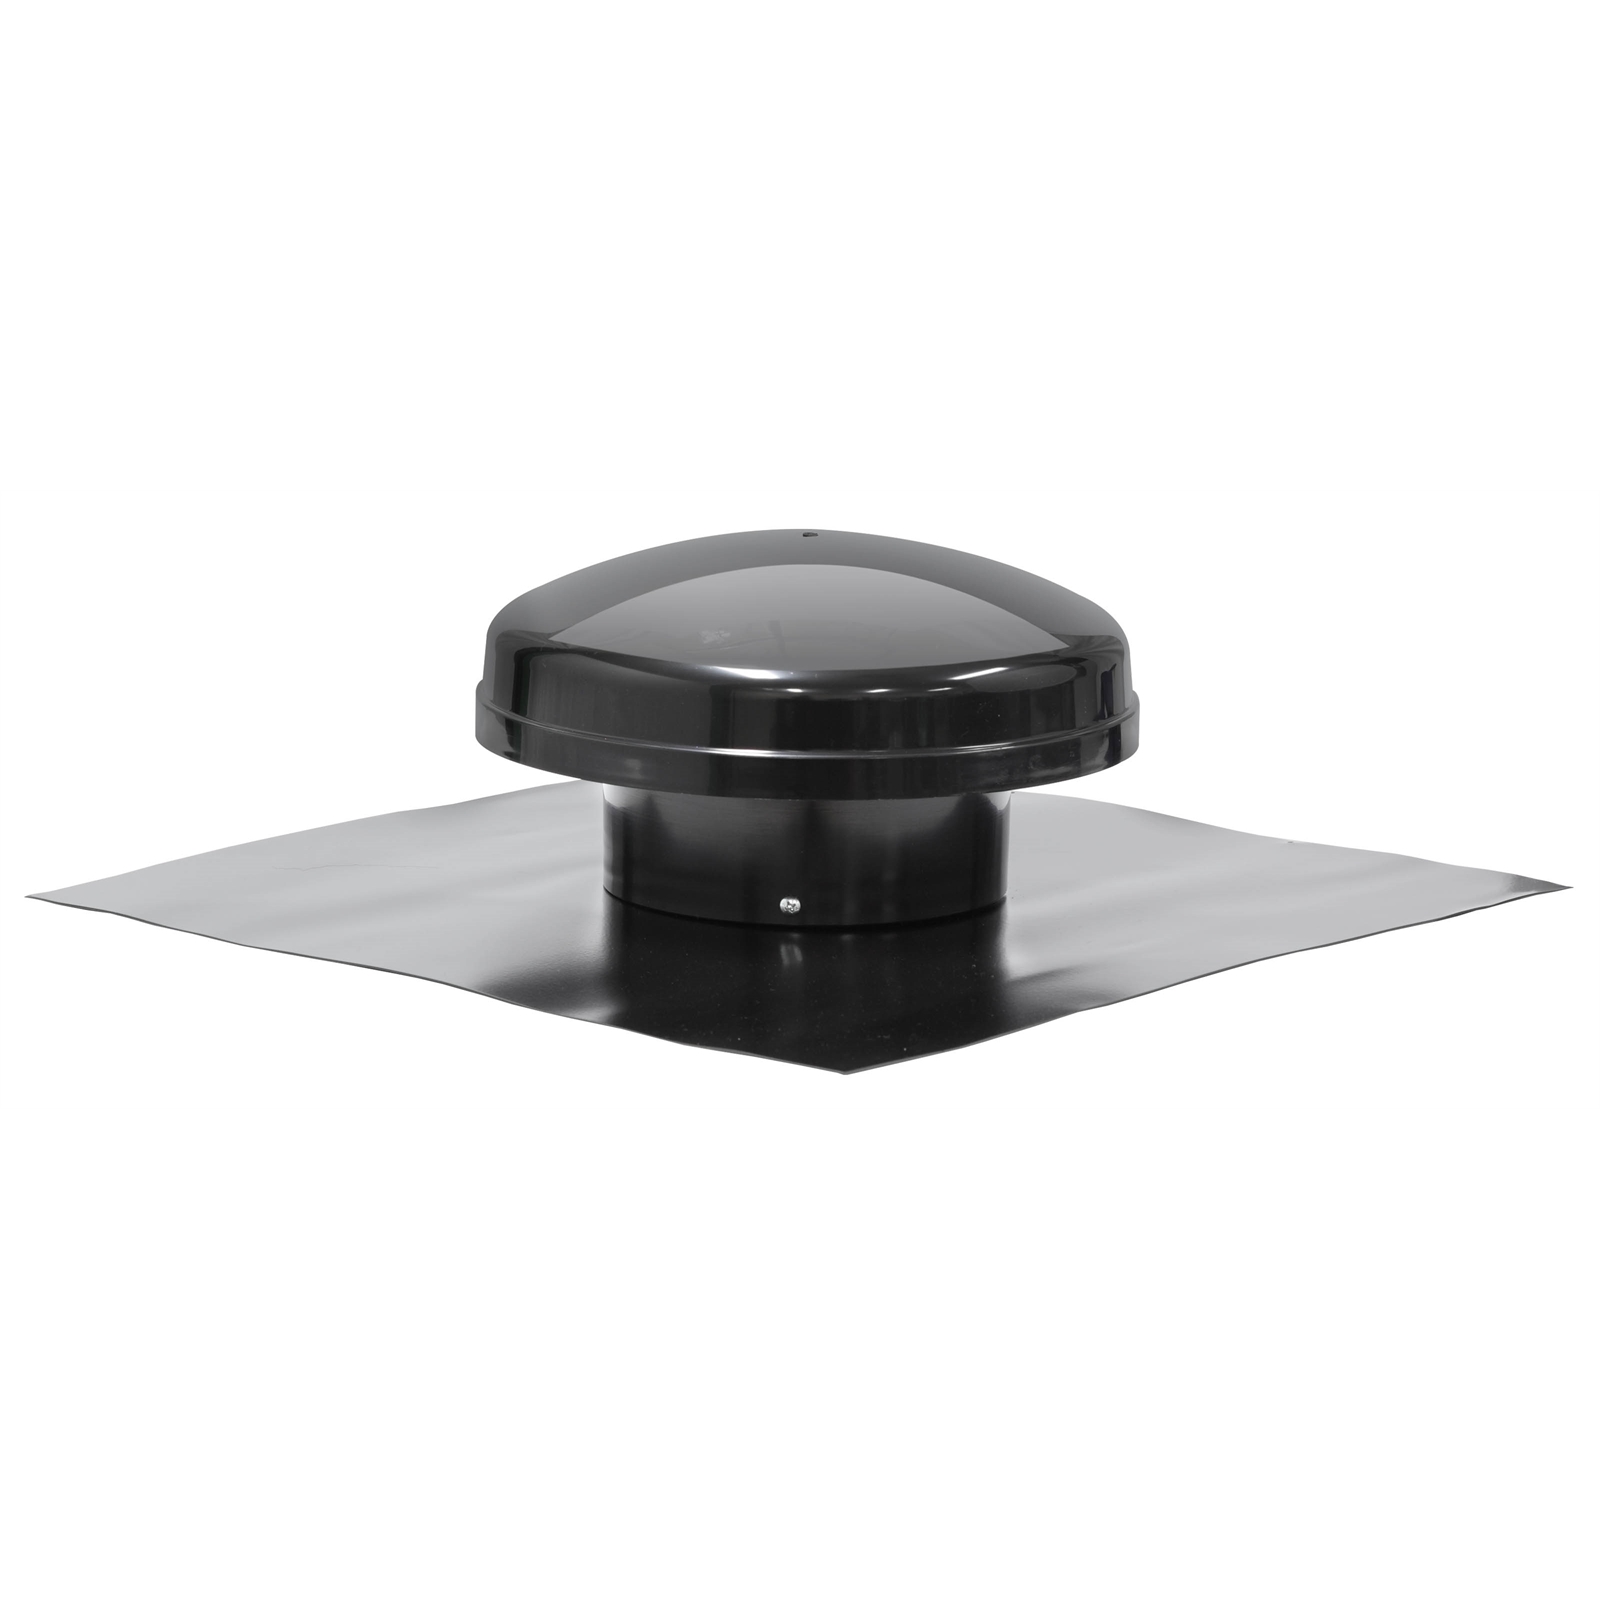 CSR Edmonds Ventilation 150mm Black Dome Roof Valve